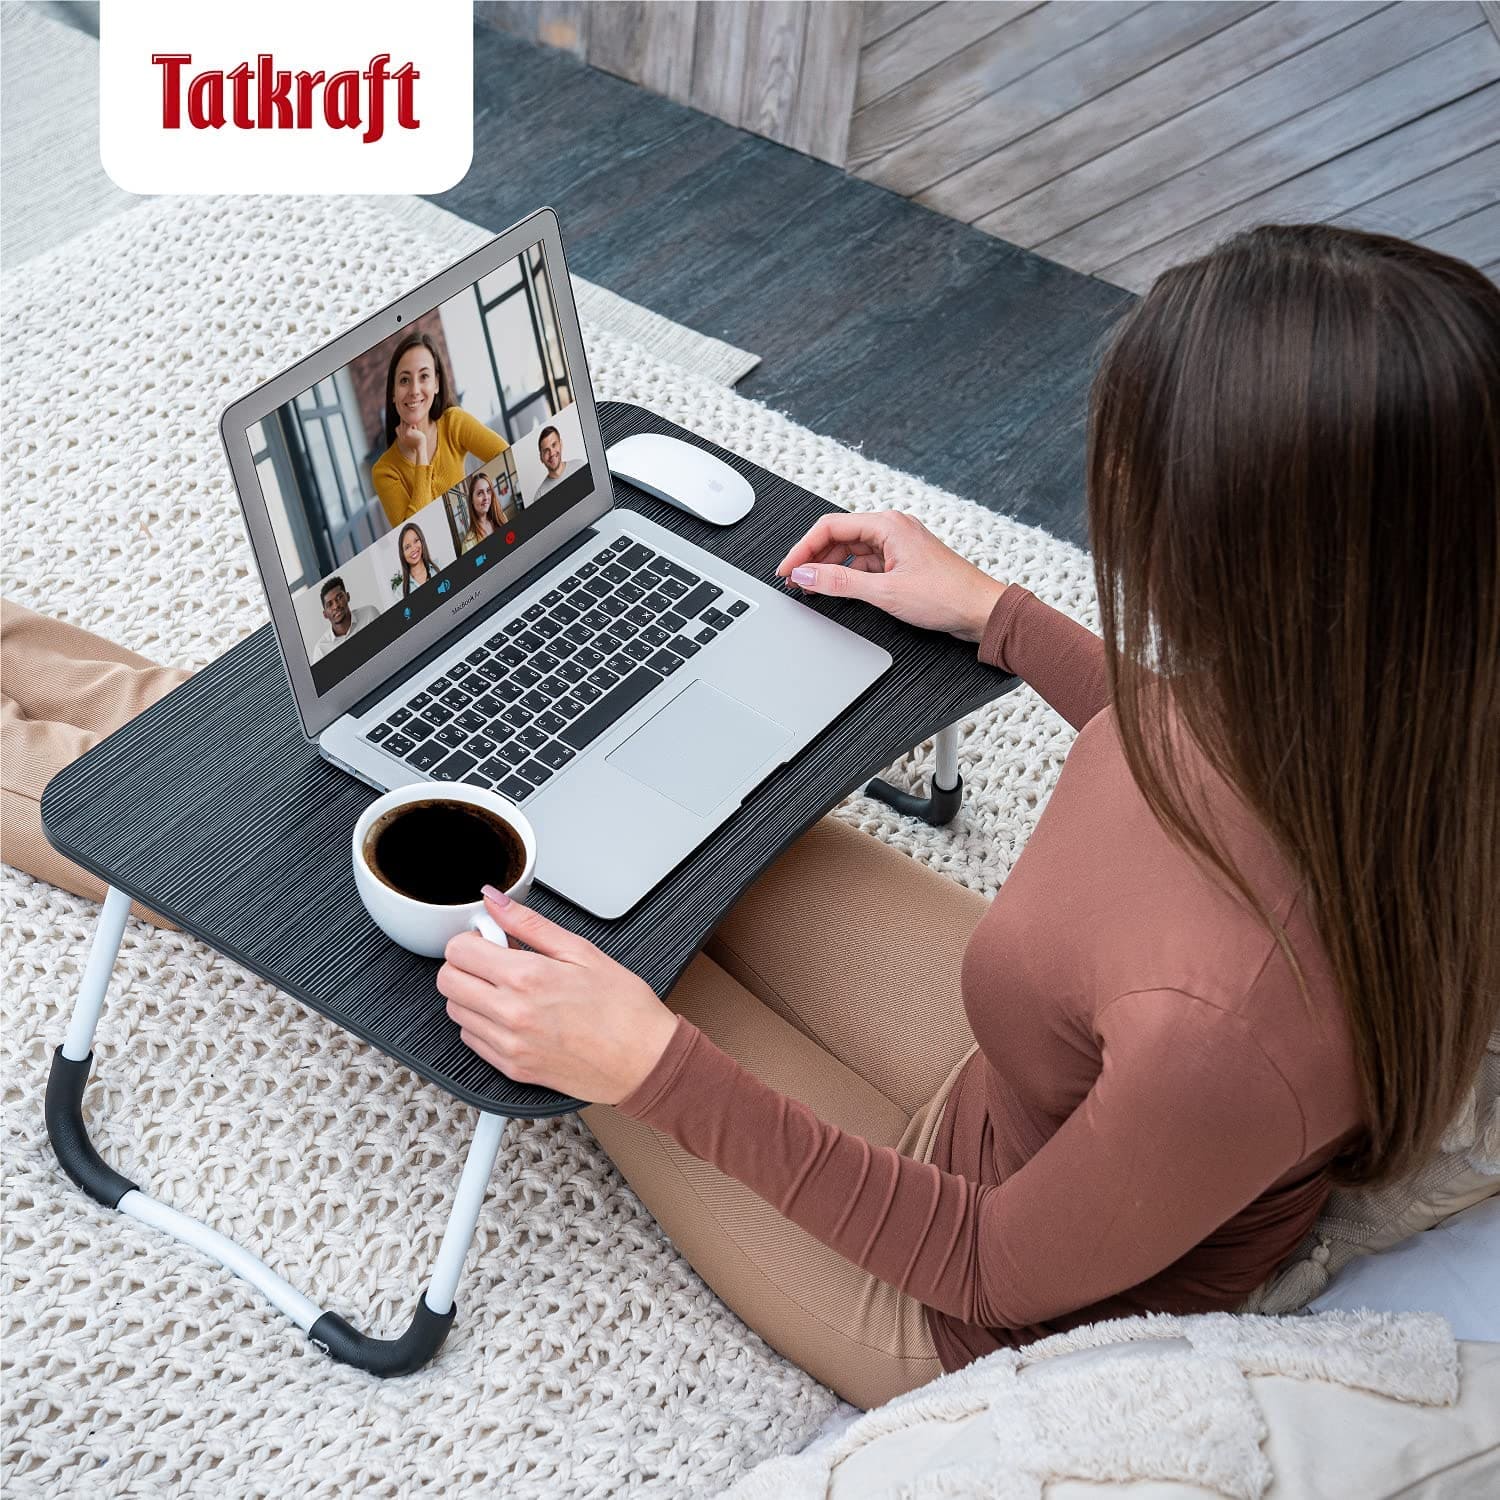  Home Office Laptop Stand, Dorm Desk for Eating, Tatkraft Olaf